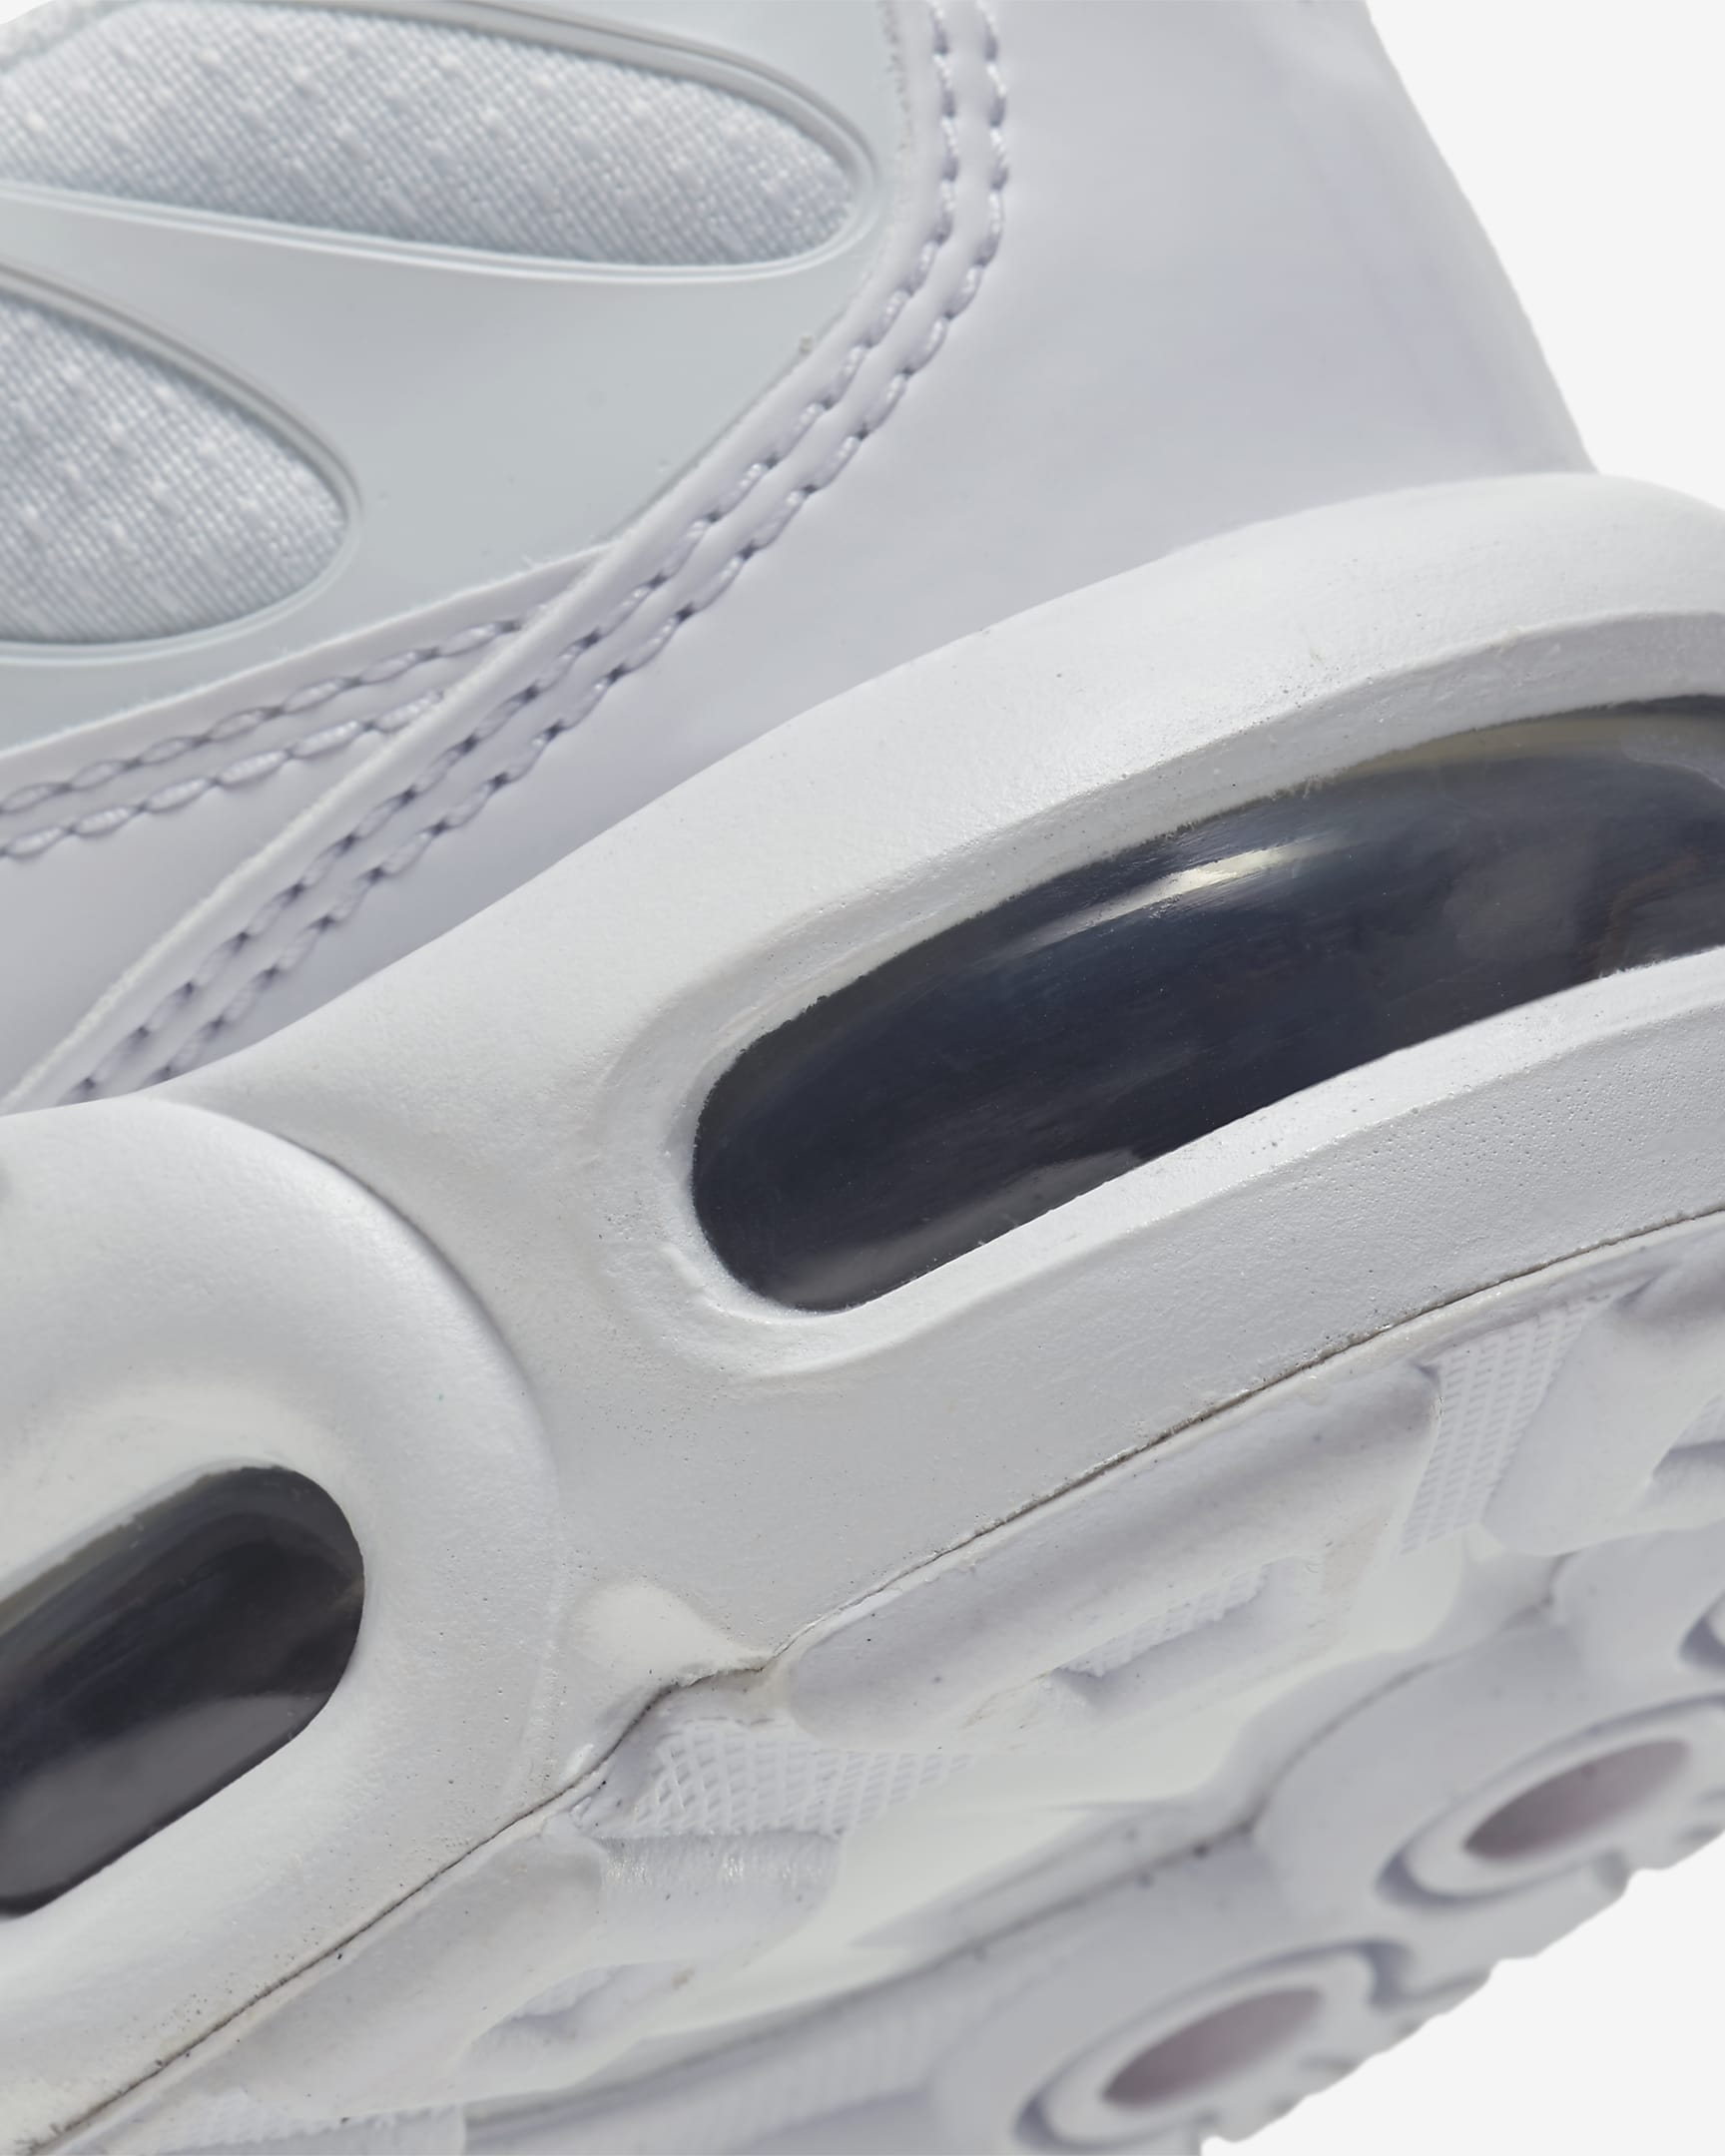 Chaussure Nike Air Max Plus pour ado - Blanc/Metallic Silver/Blanc